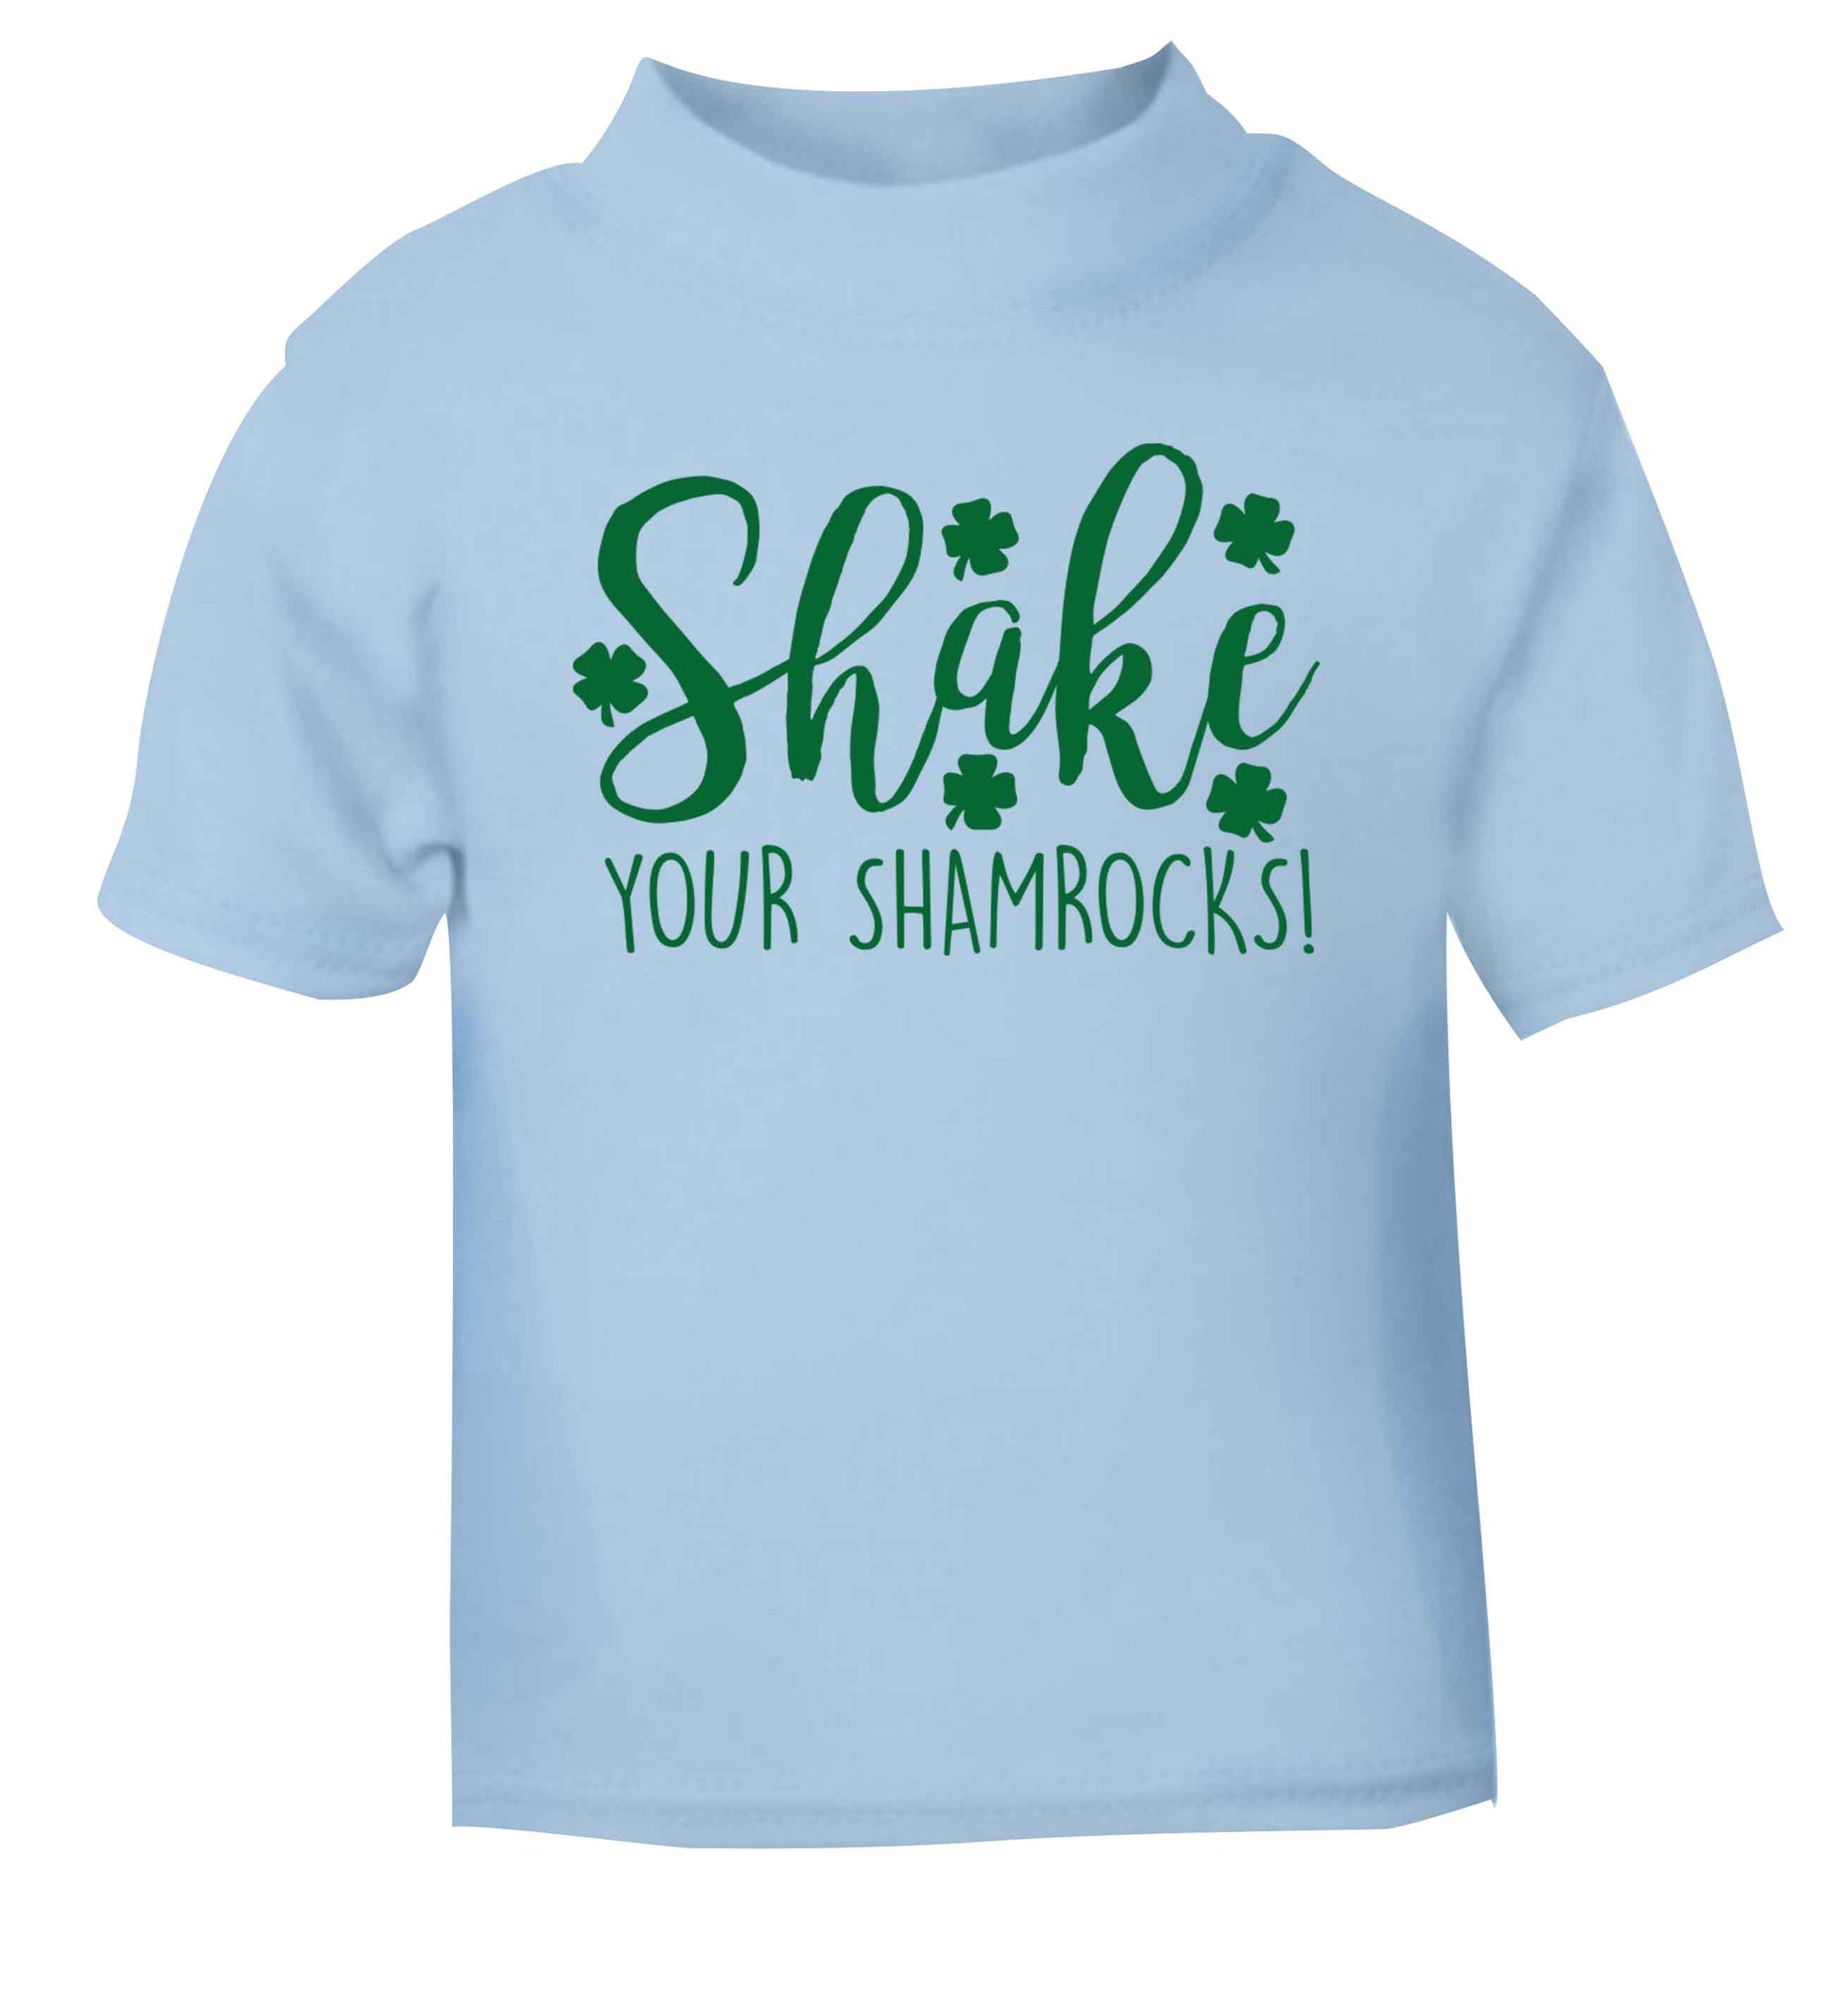 Shake your shamrocks light blue baby toddler Tshirt 2 Years